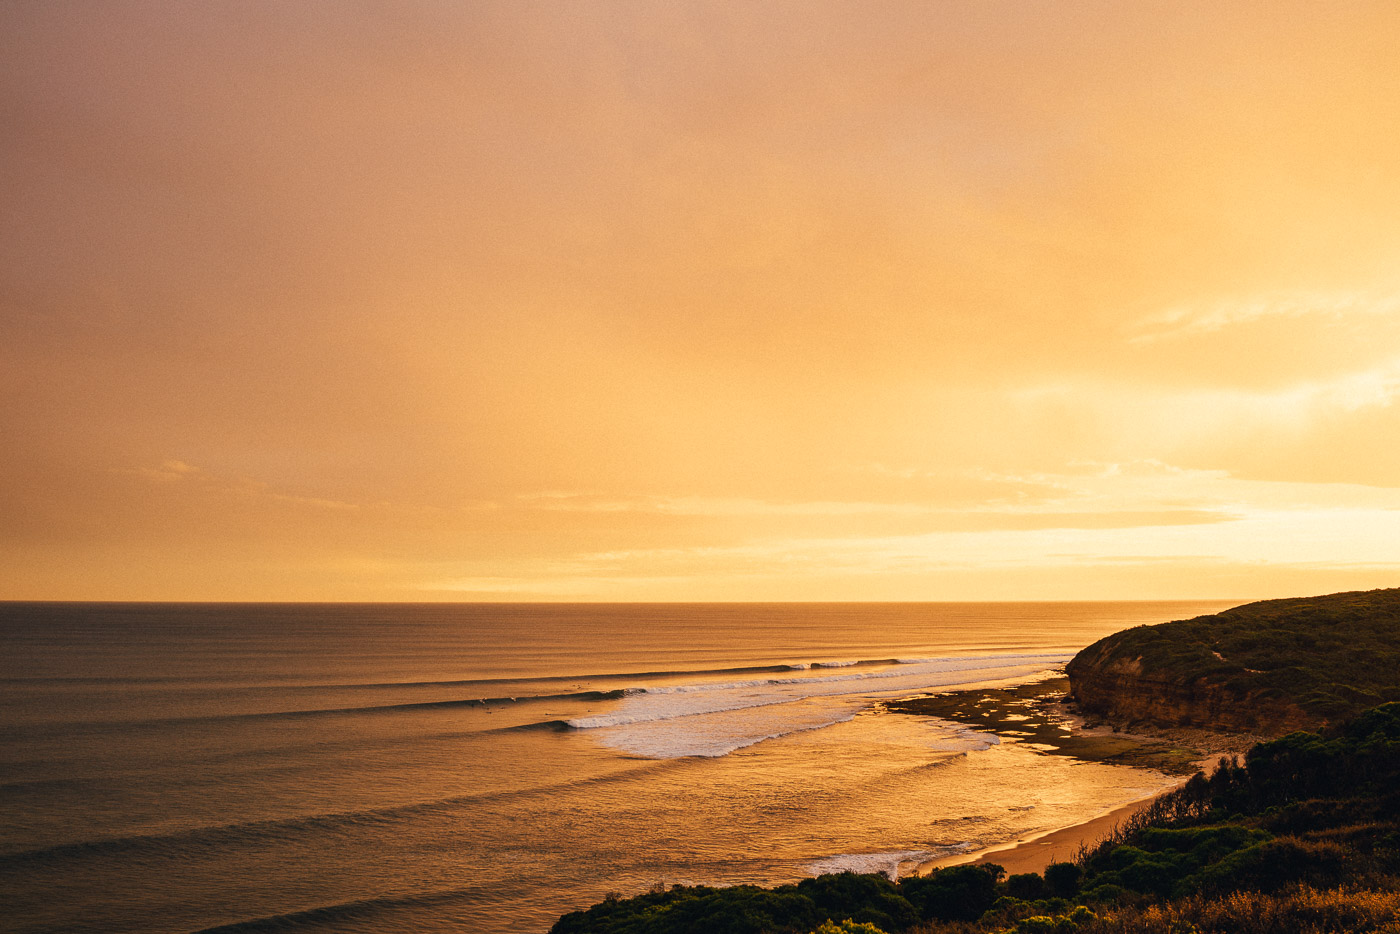 Bells Beach at sunset in Australia. Photo by Sony Ambassador Stefan Haworth